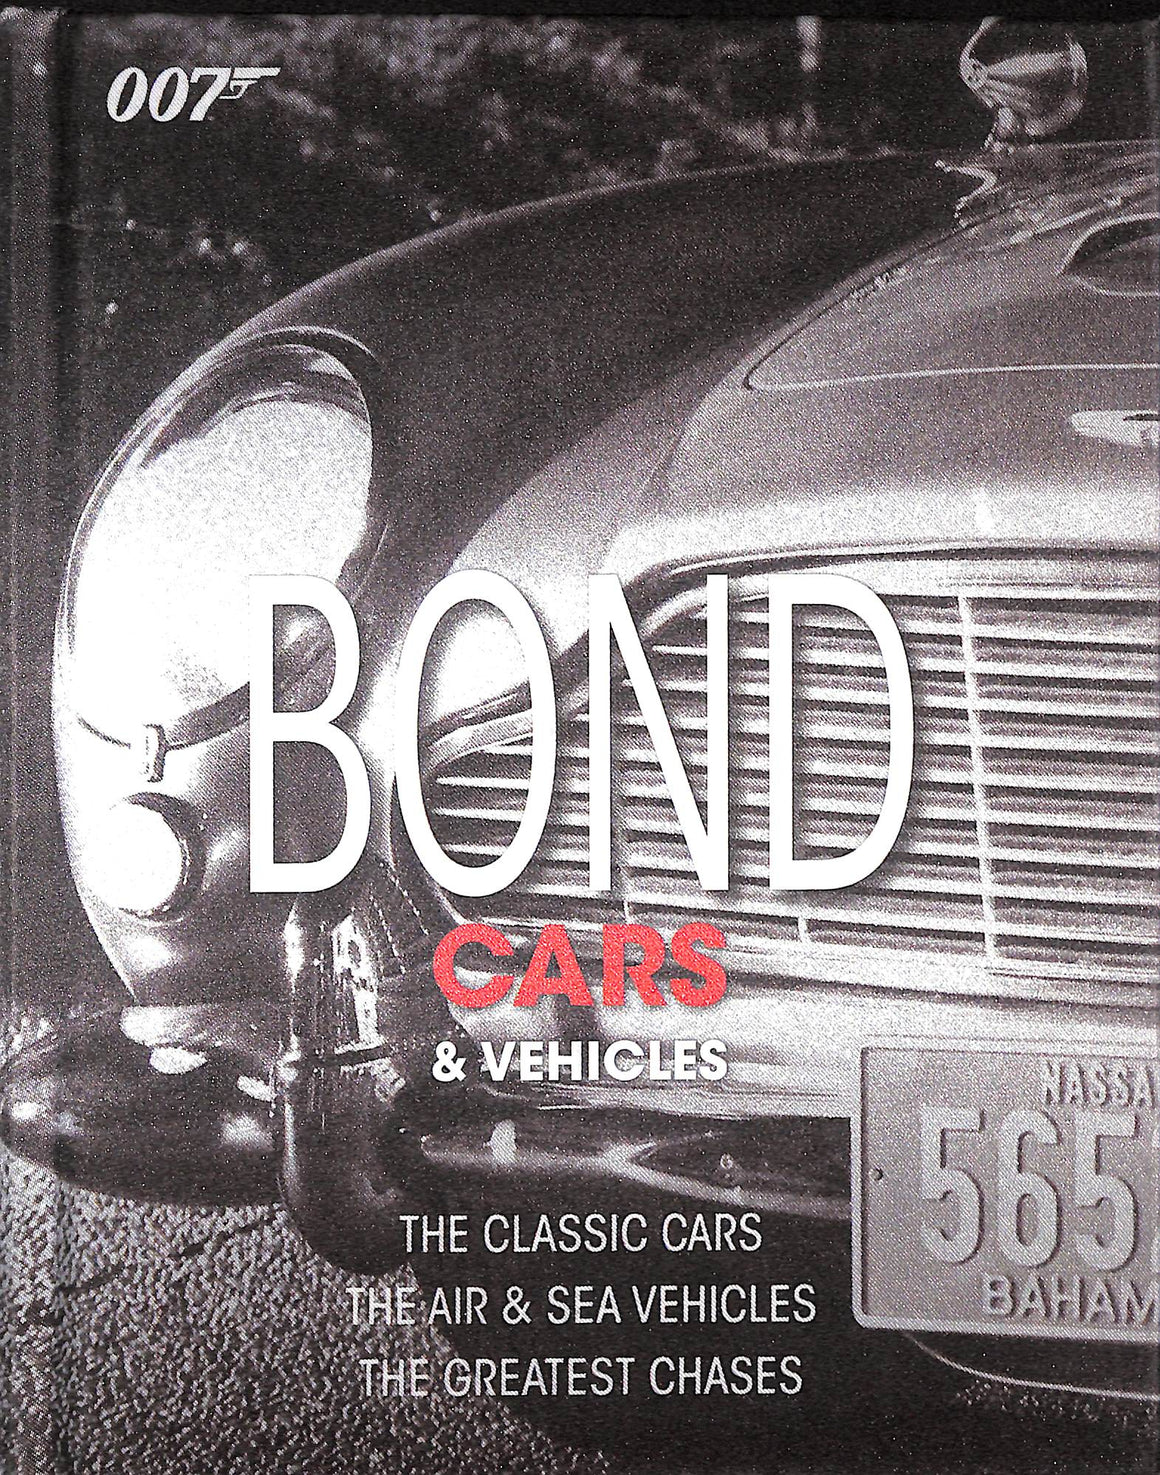 "Bond Cars & Vehicles" 2010 DOUGALL, Alastair